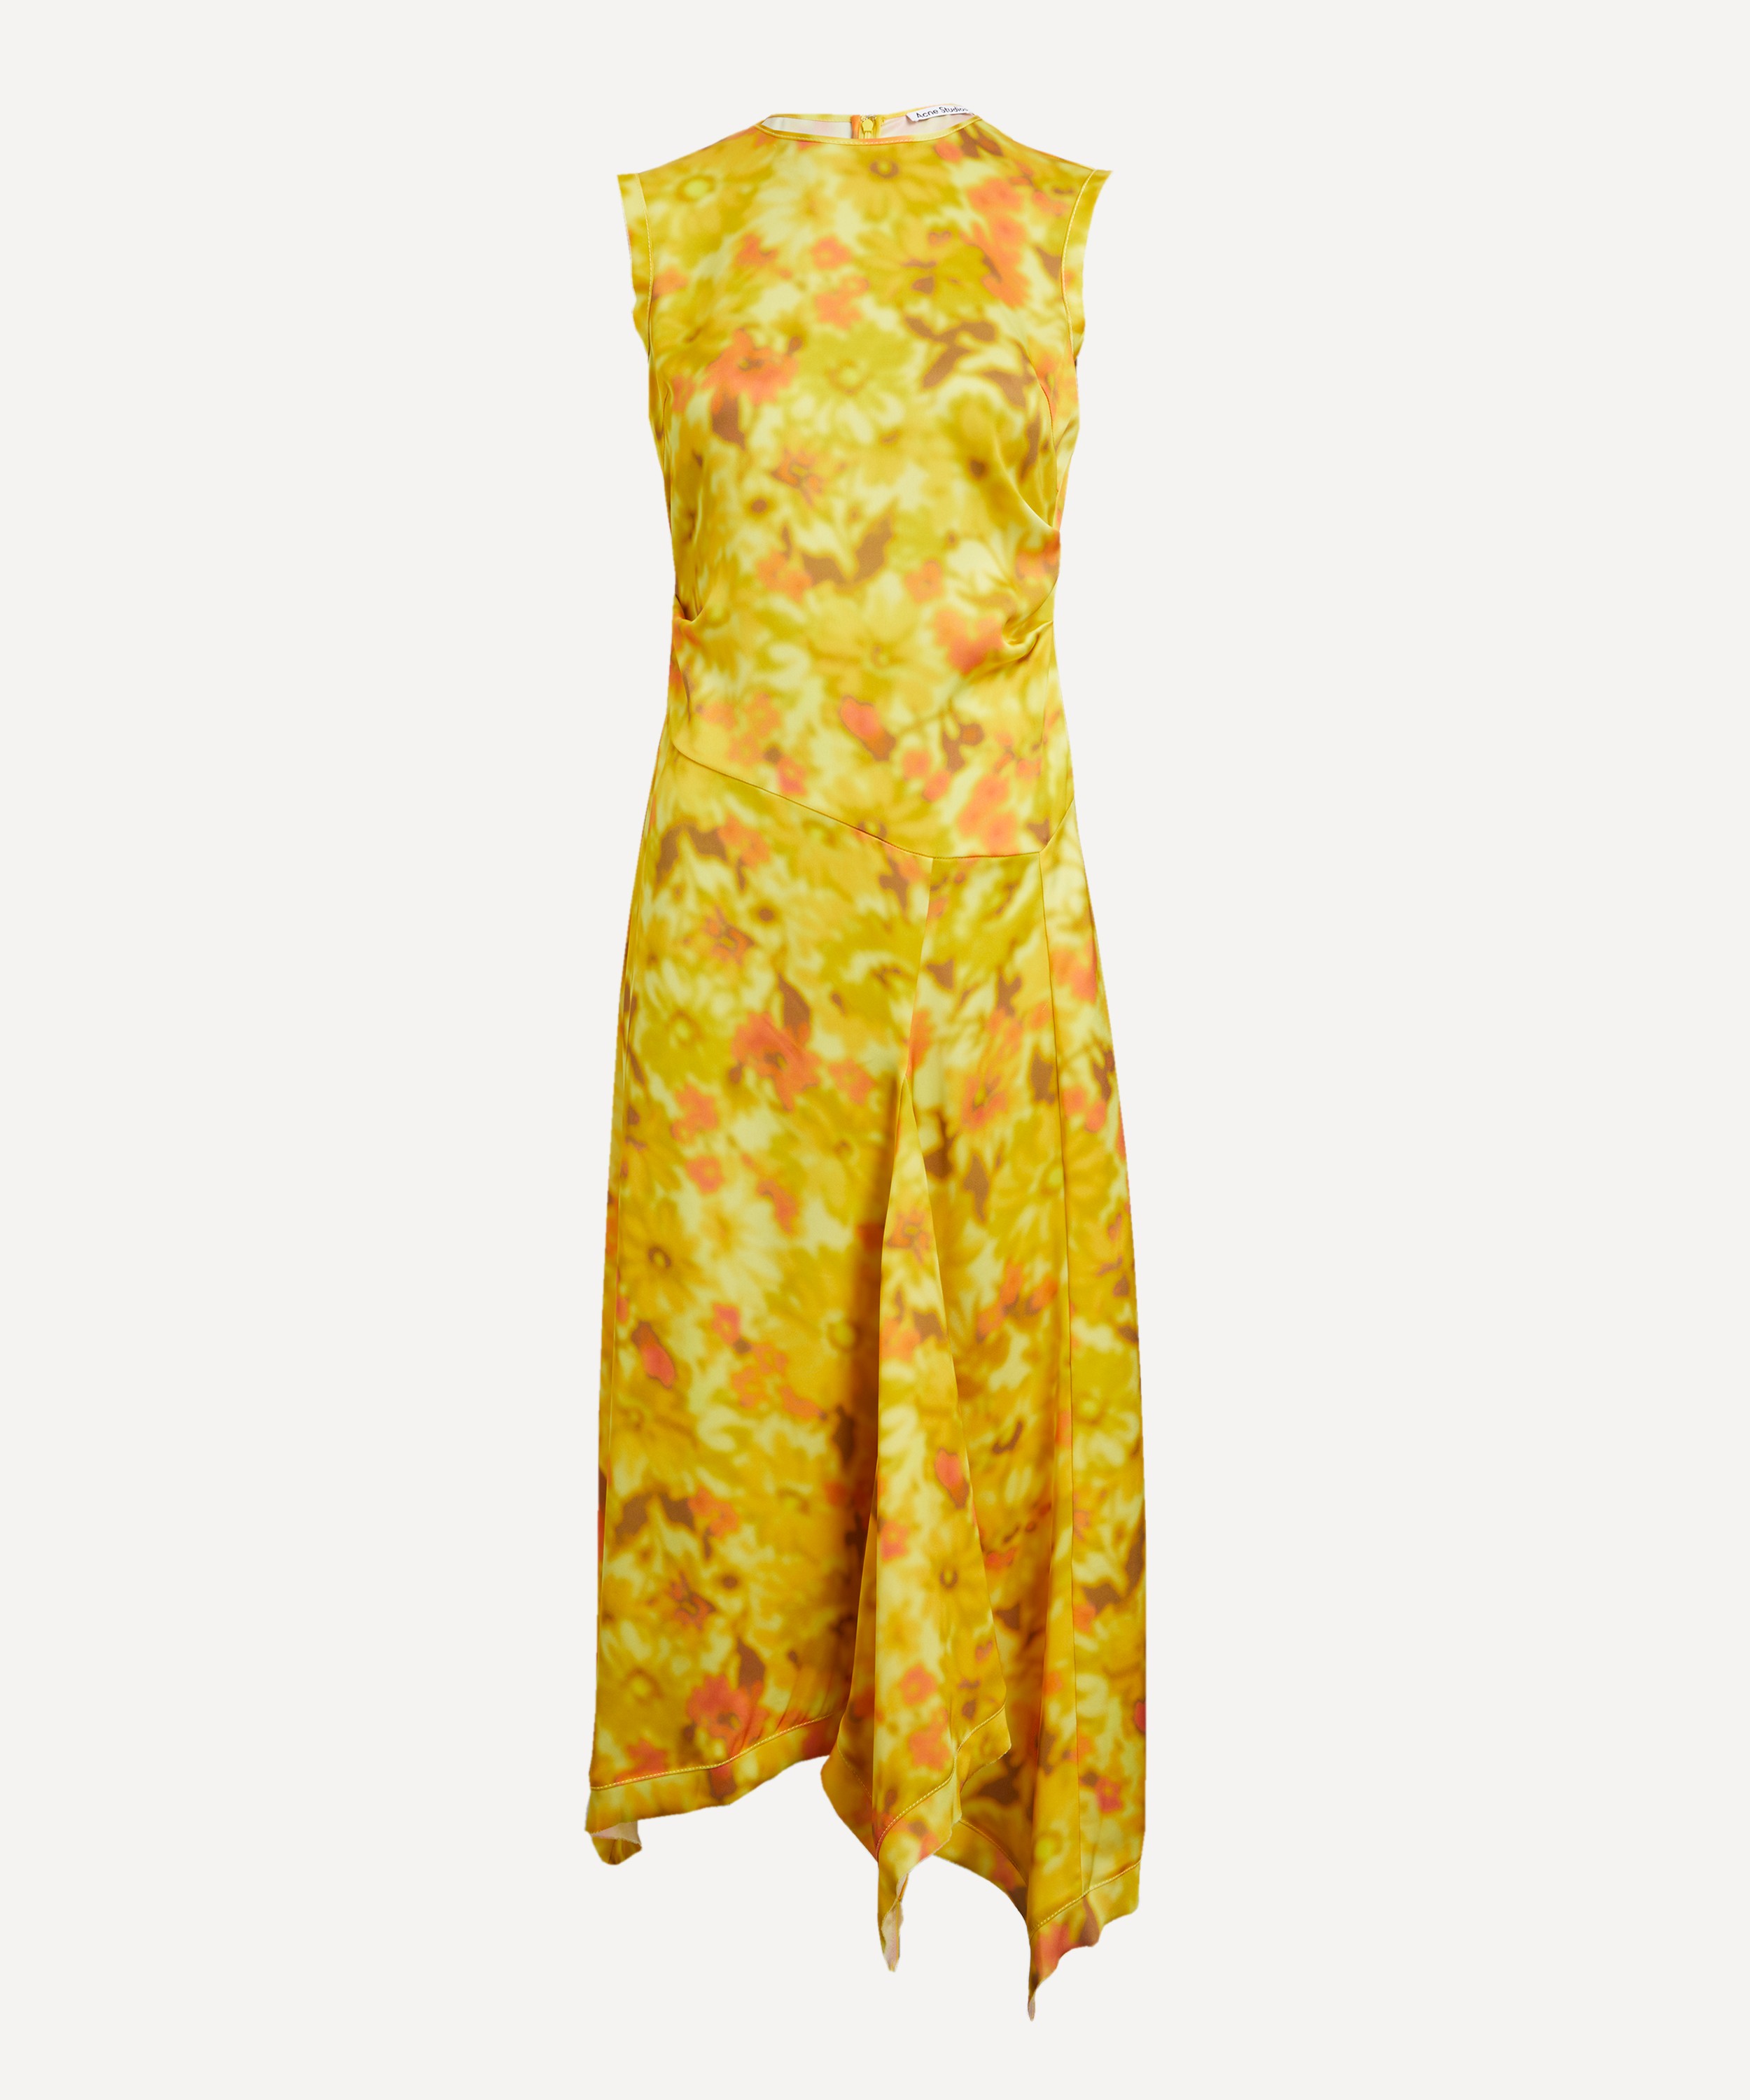 Acne Studios - Yellow Printed Sleeveless Dress